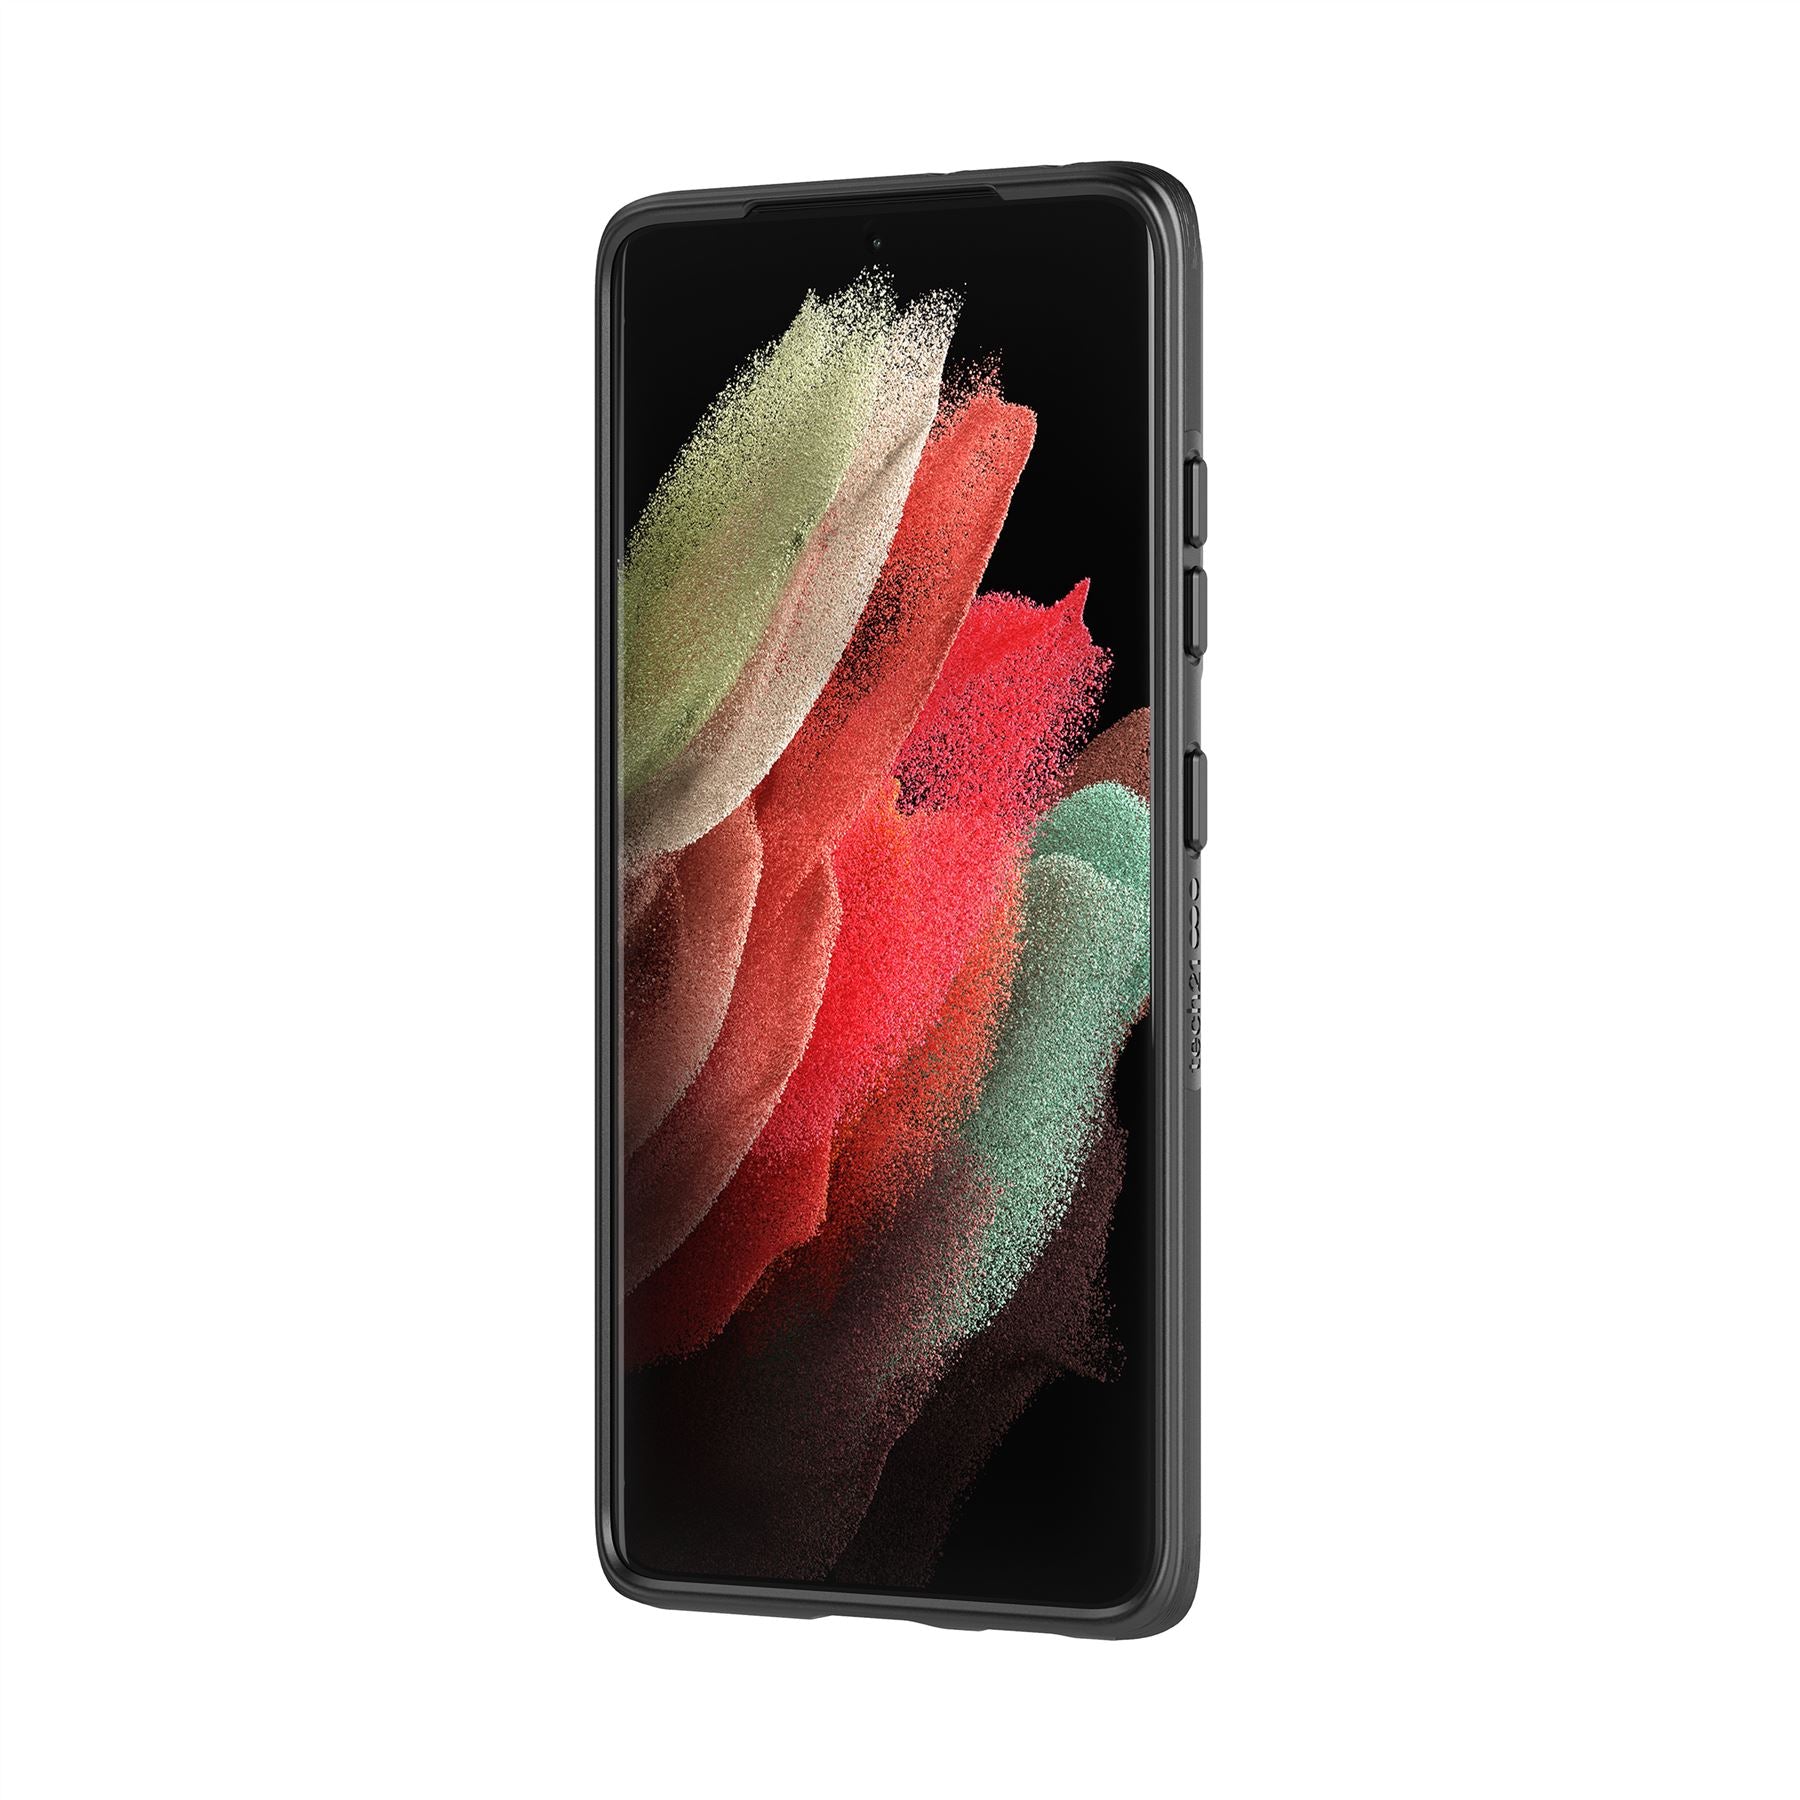 Evo Slim - Samsung Galaxy S21 Ultra 5G Case - Charcoal Black